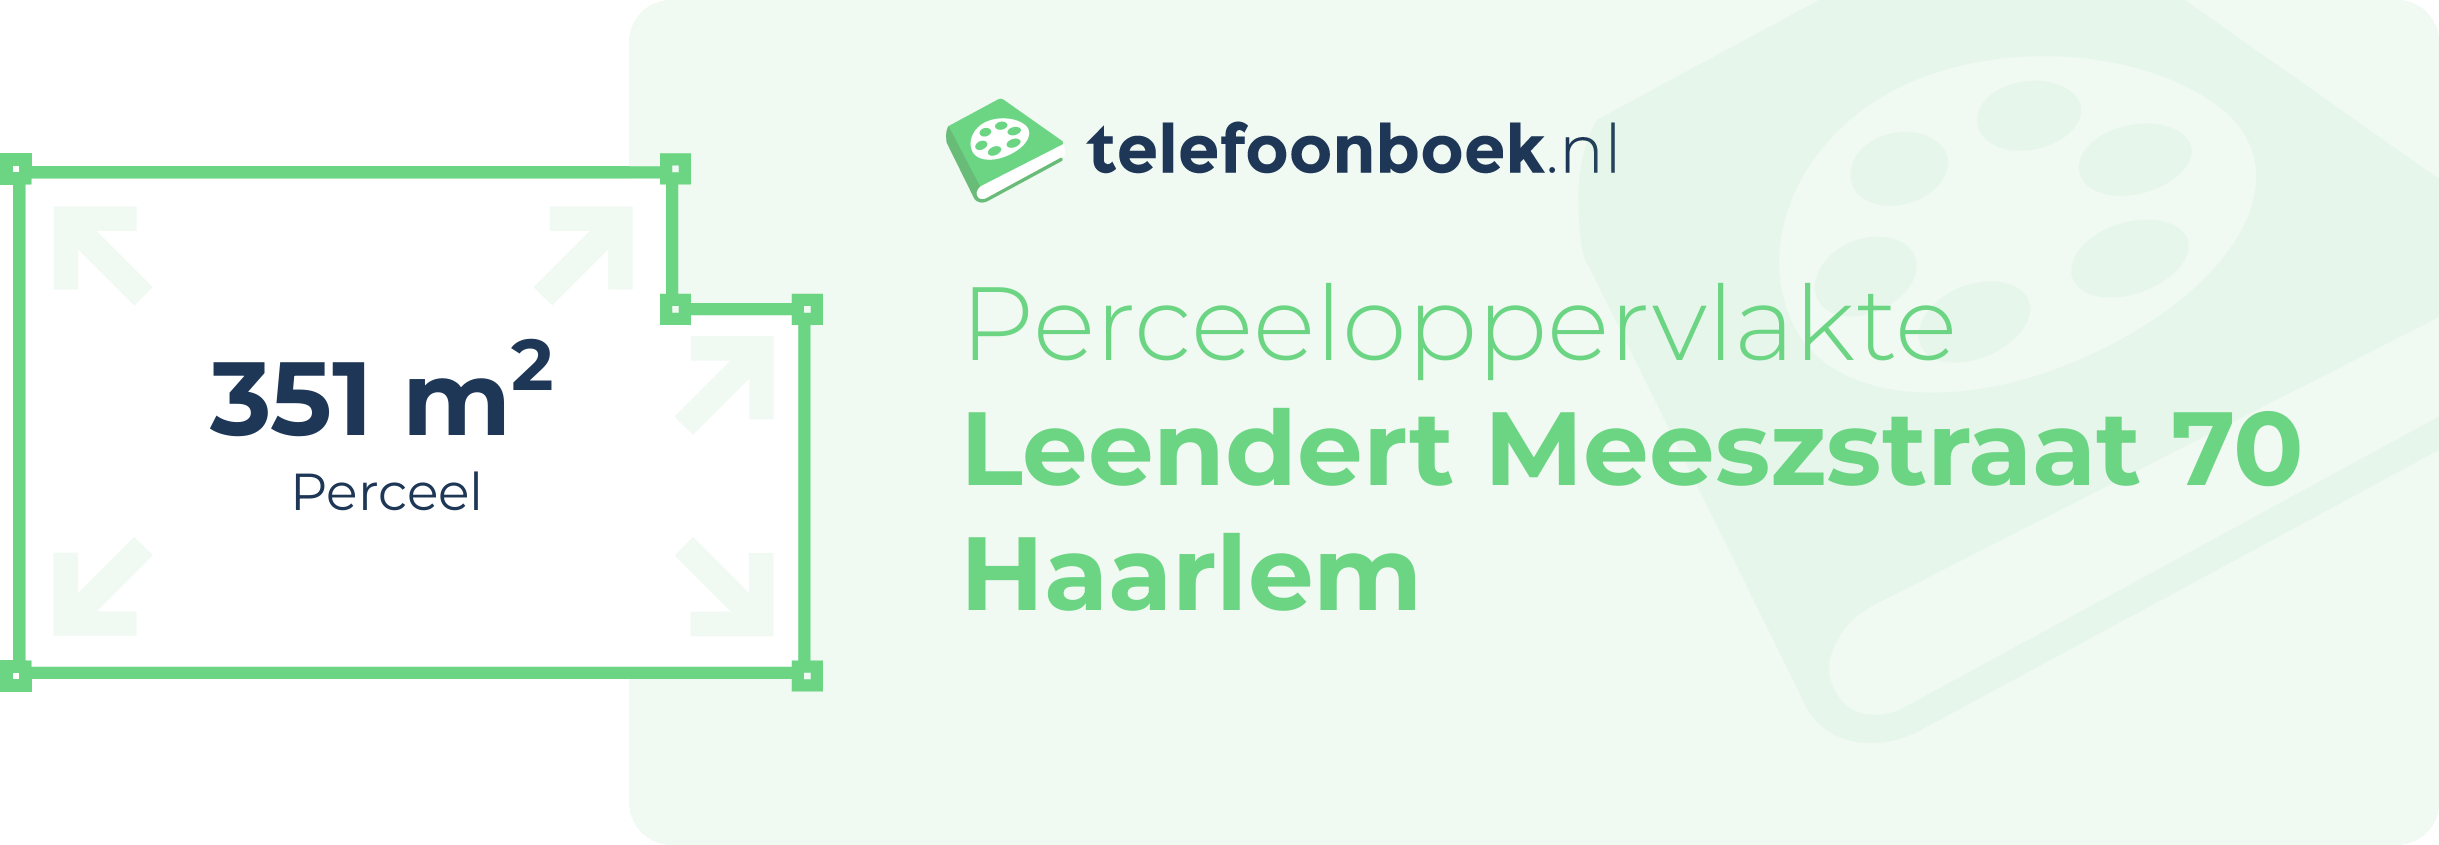 Perceeloppervlakte Leendert Meeszstraat 70 Haarlem